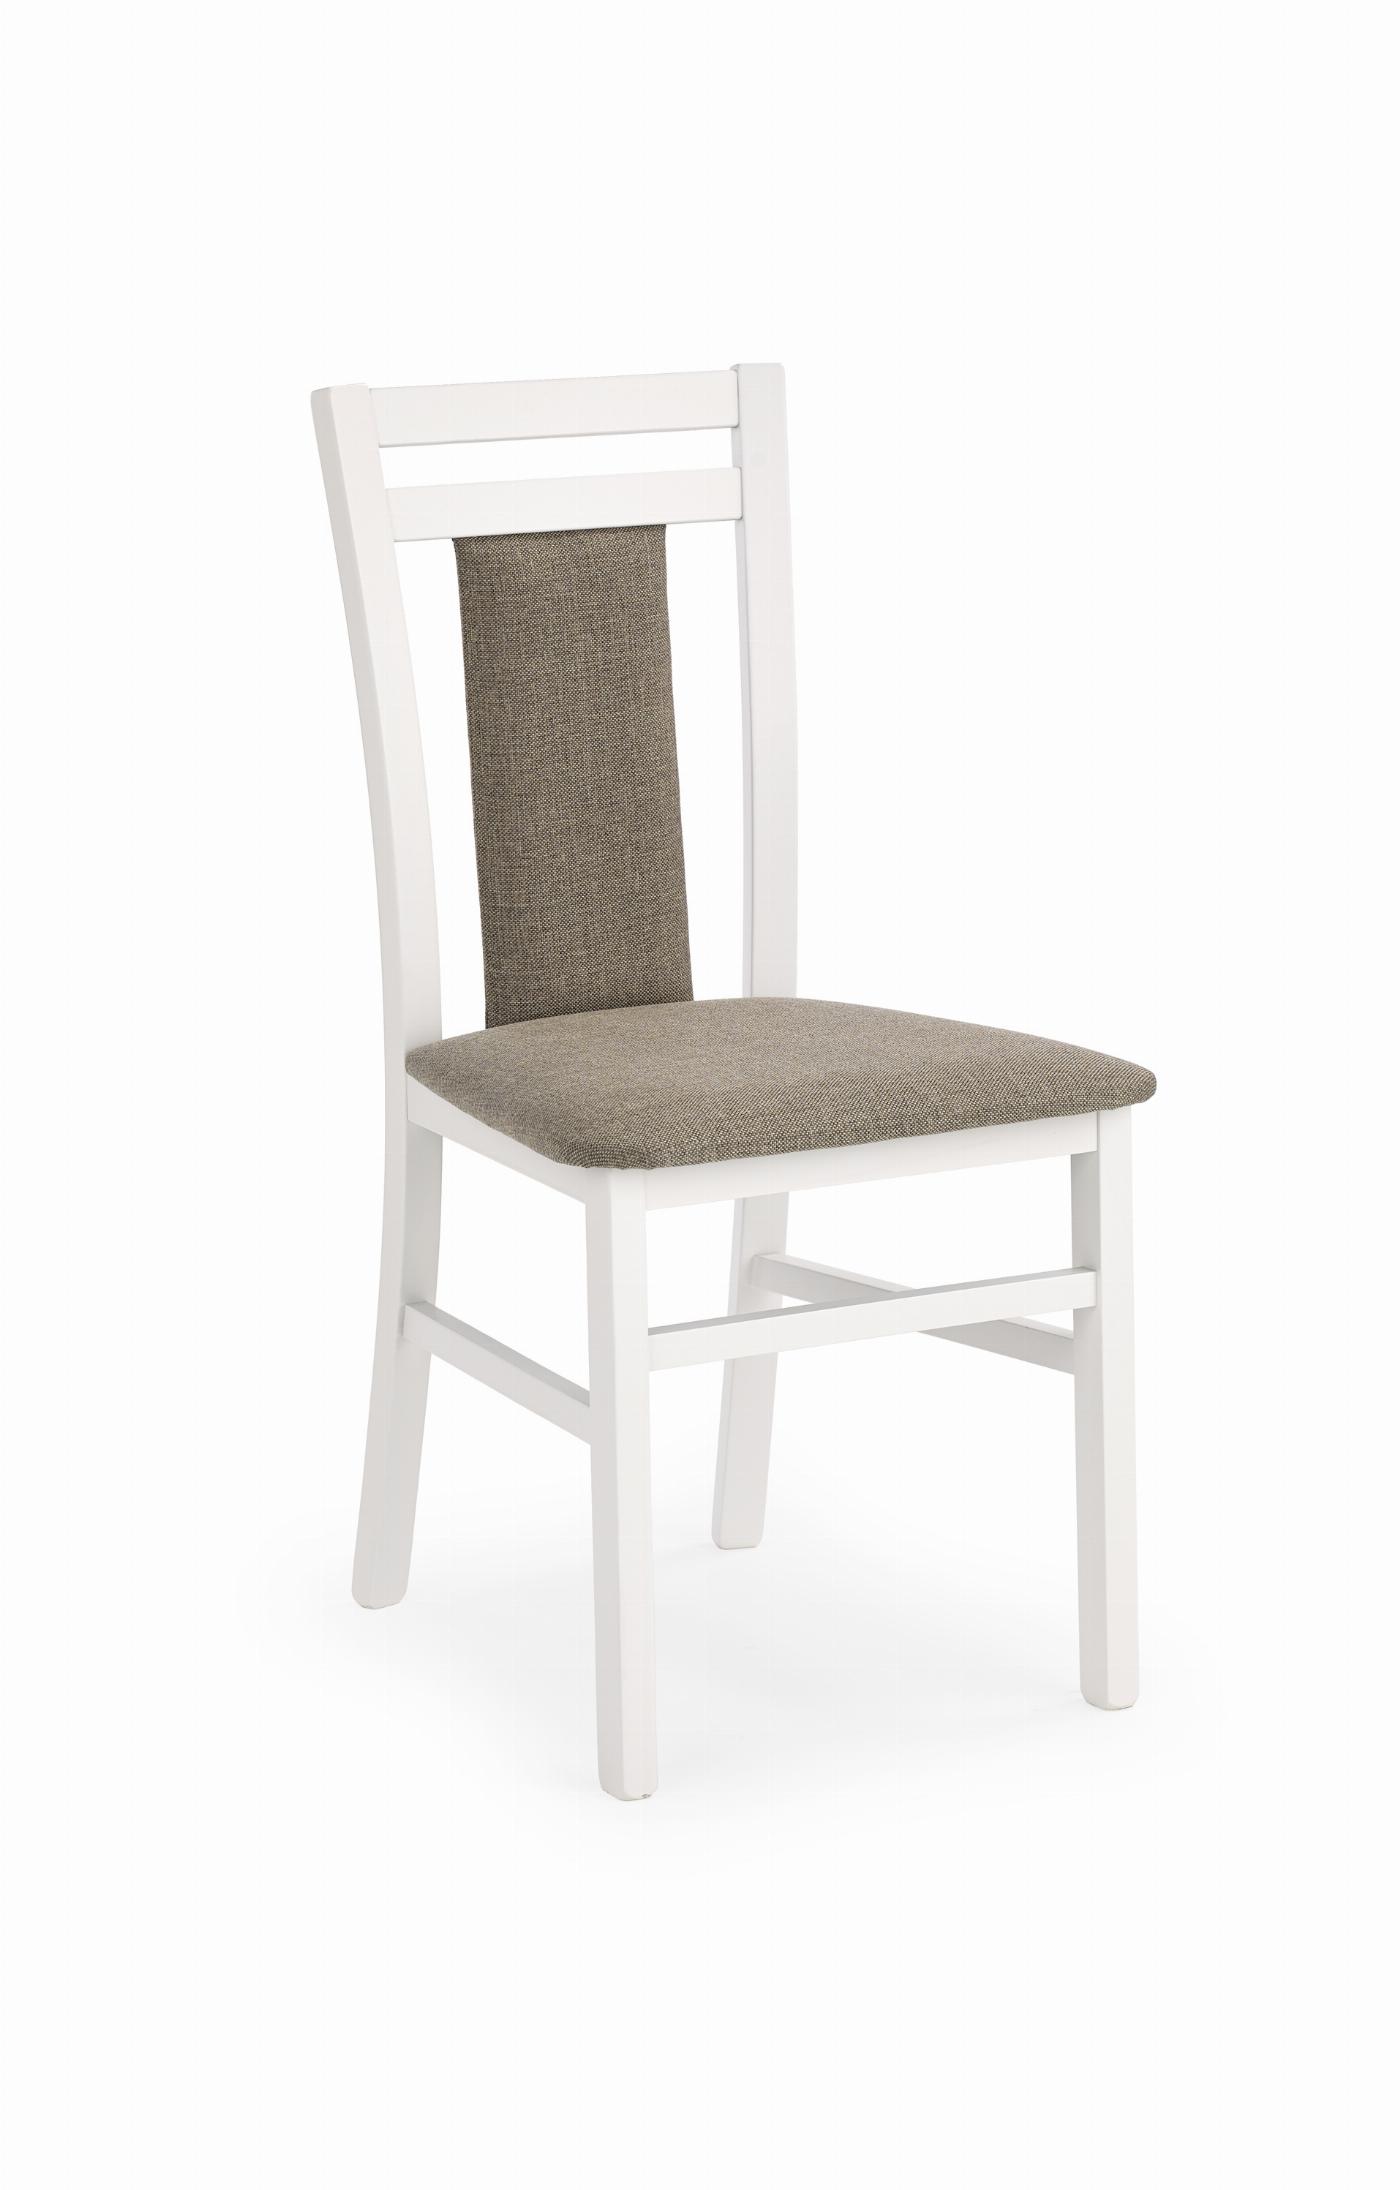 HUBERT8 krzesło biały / tap: Inari 23